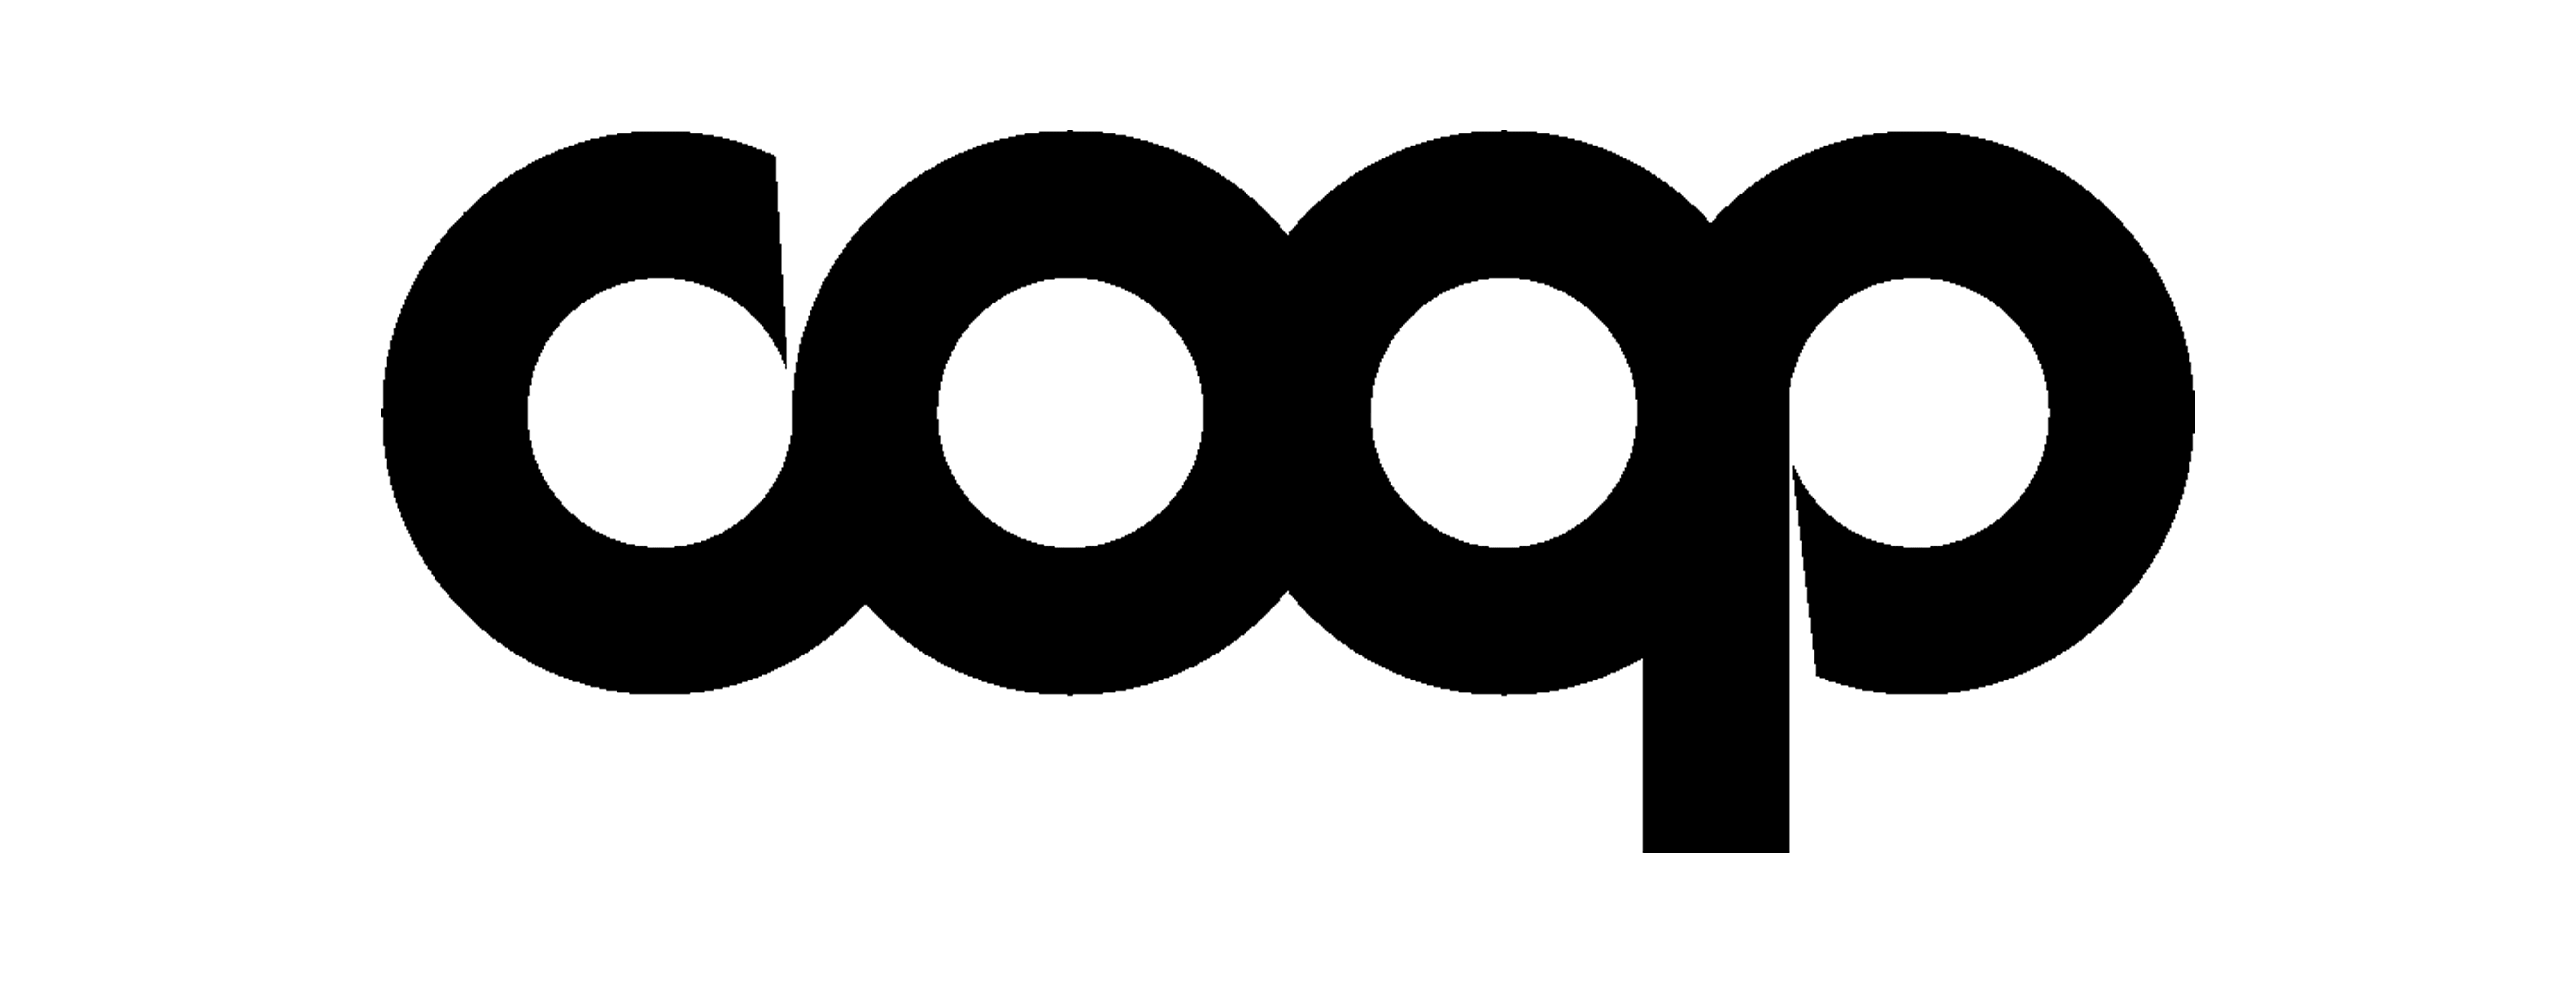 Dogix_logo coop